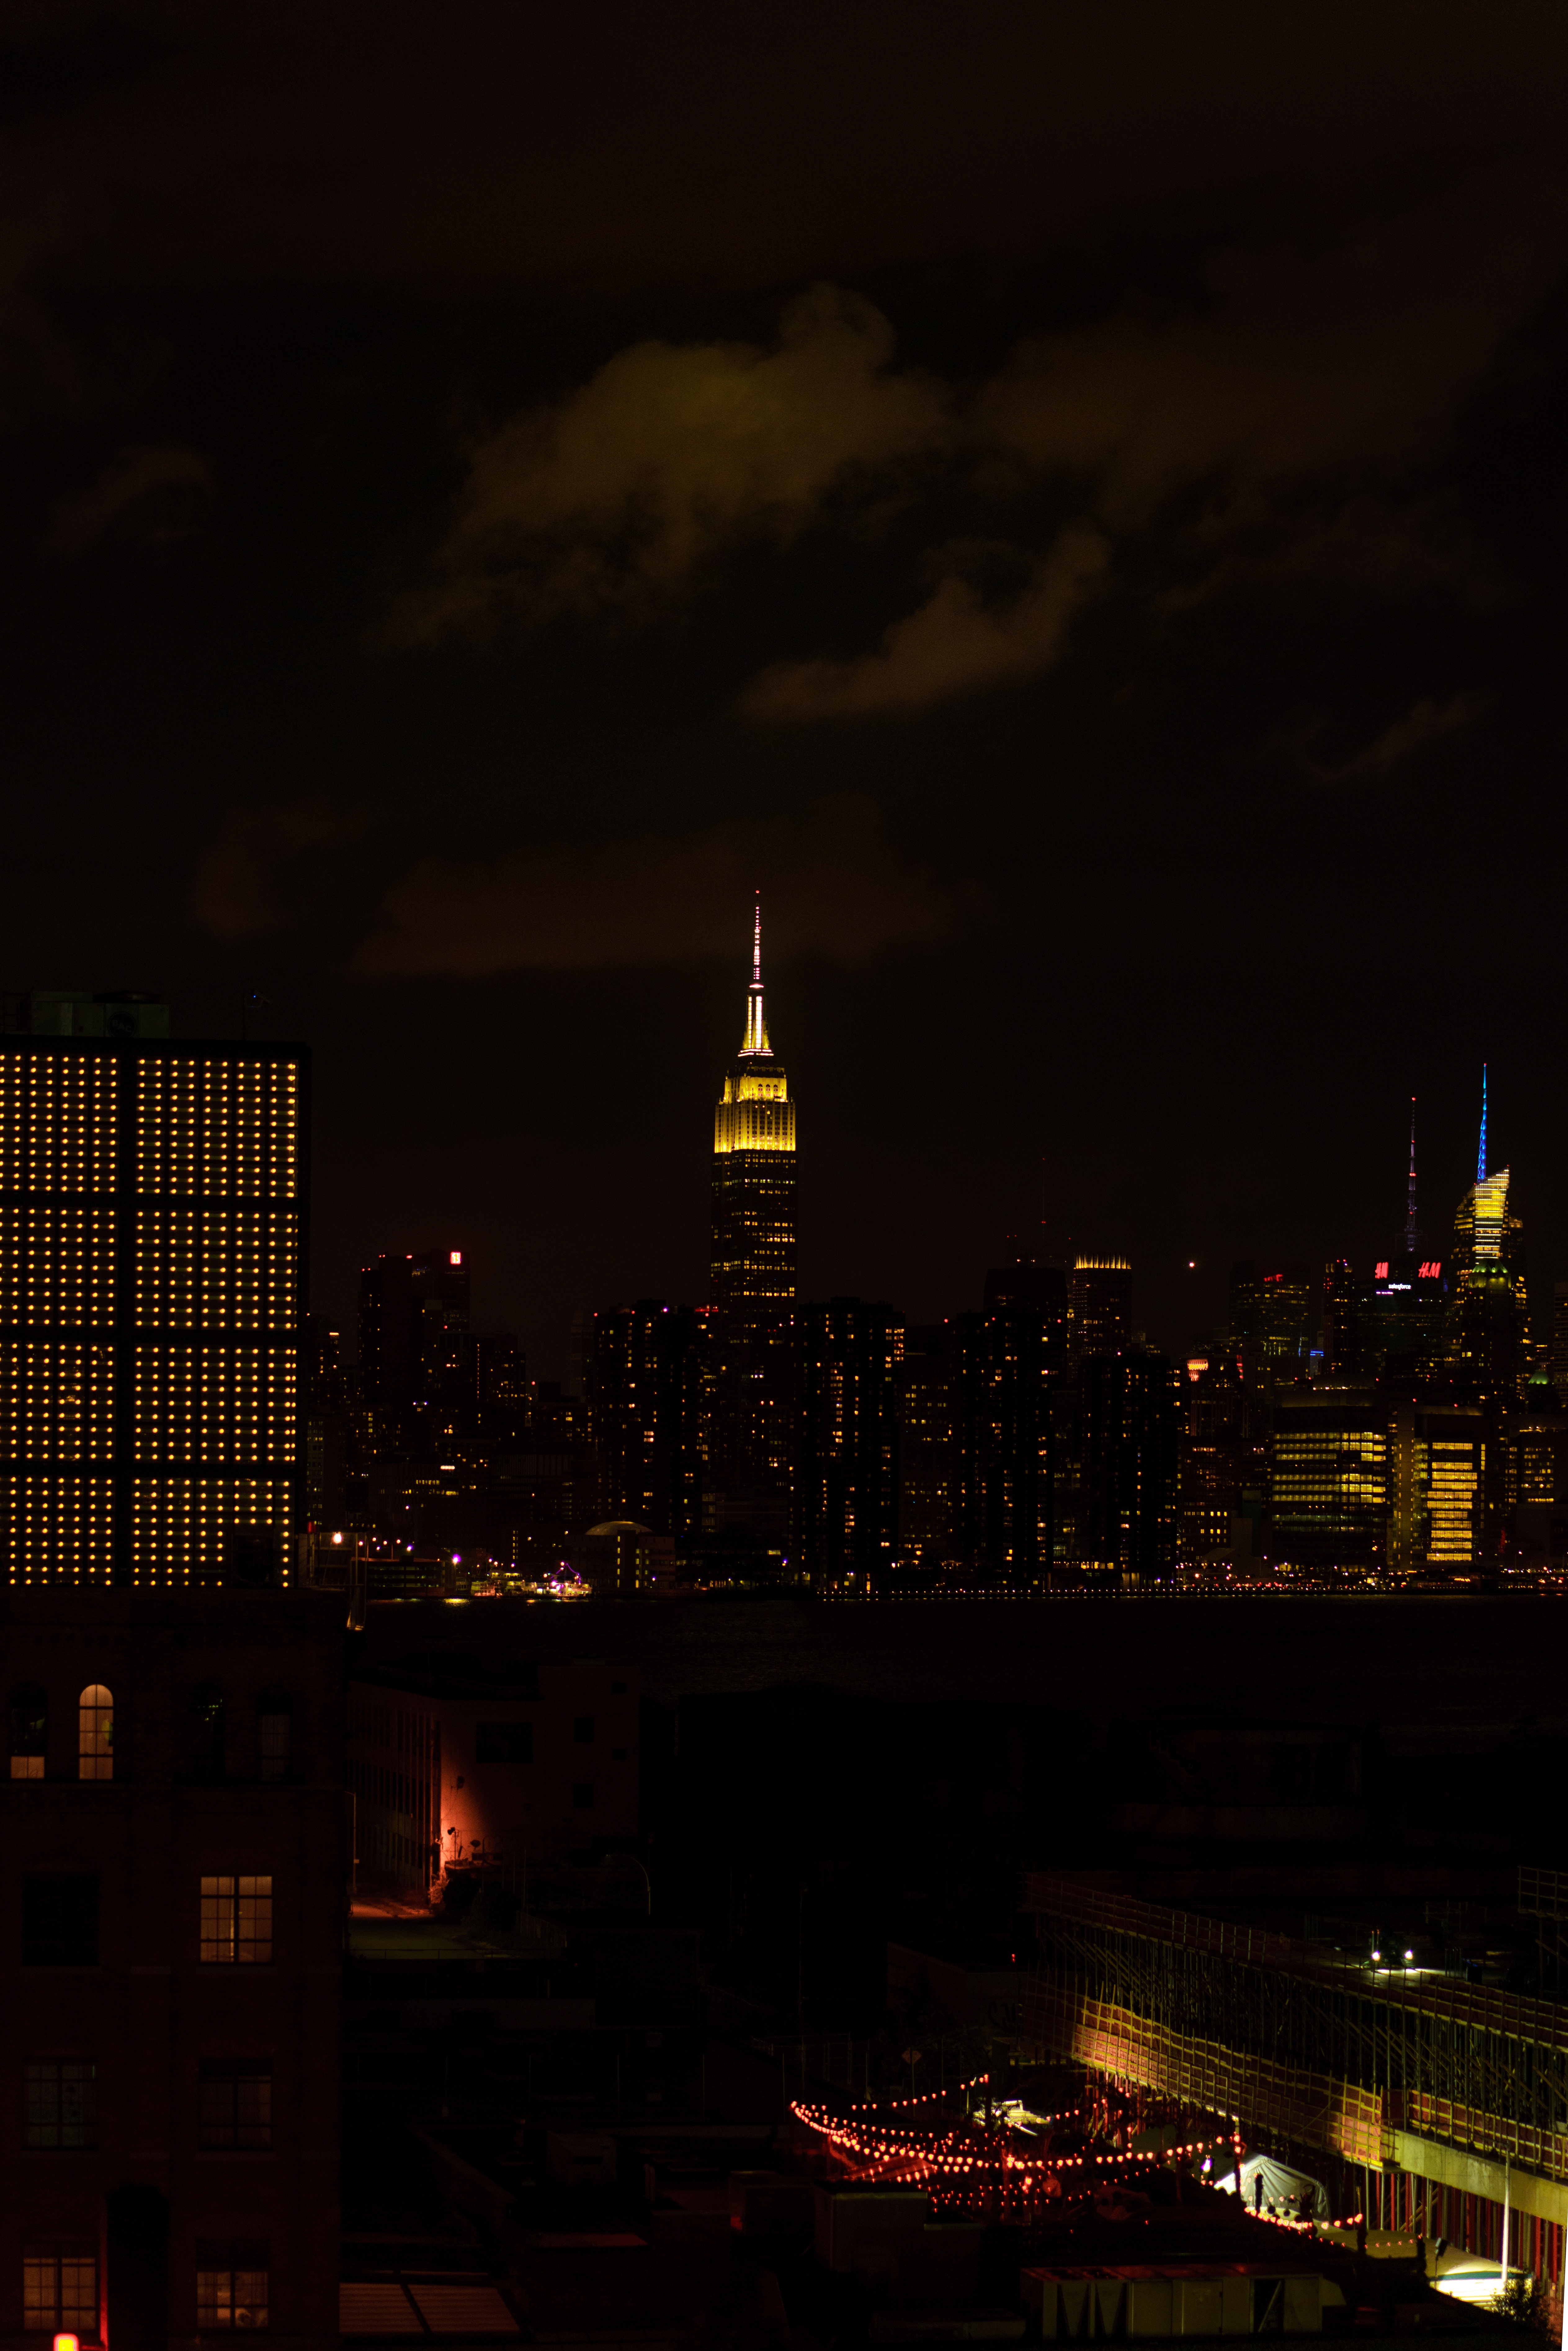 PCデスクトップに米国, 超高層ビル, 街の明かり, シティライツ, メガロポリス, メガポリス, ニューヨーク州, 都市, ナイトシティ, ニューヨーク, 夜の街画像を無料でダウンロード